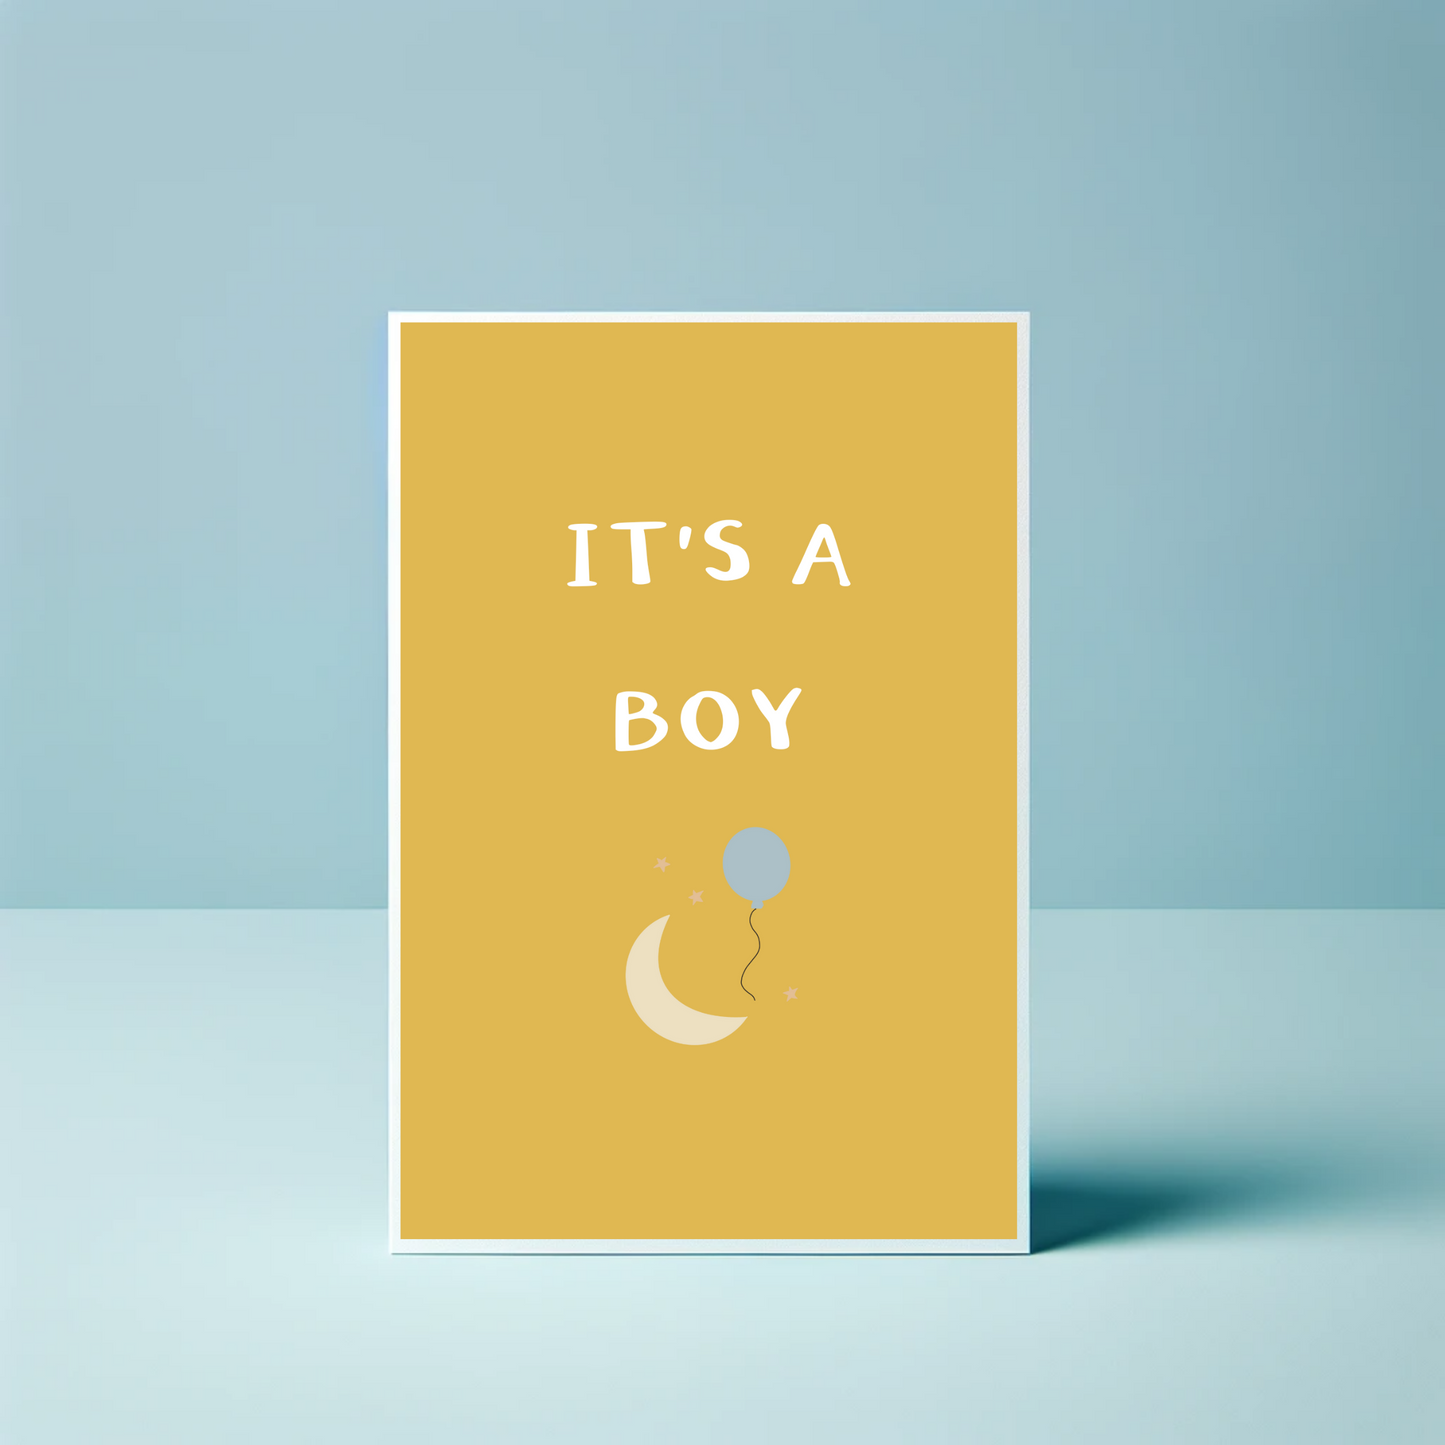 It's A Boy - New Baby